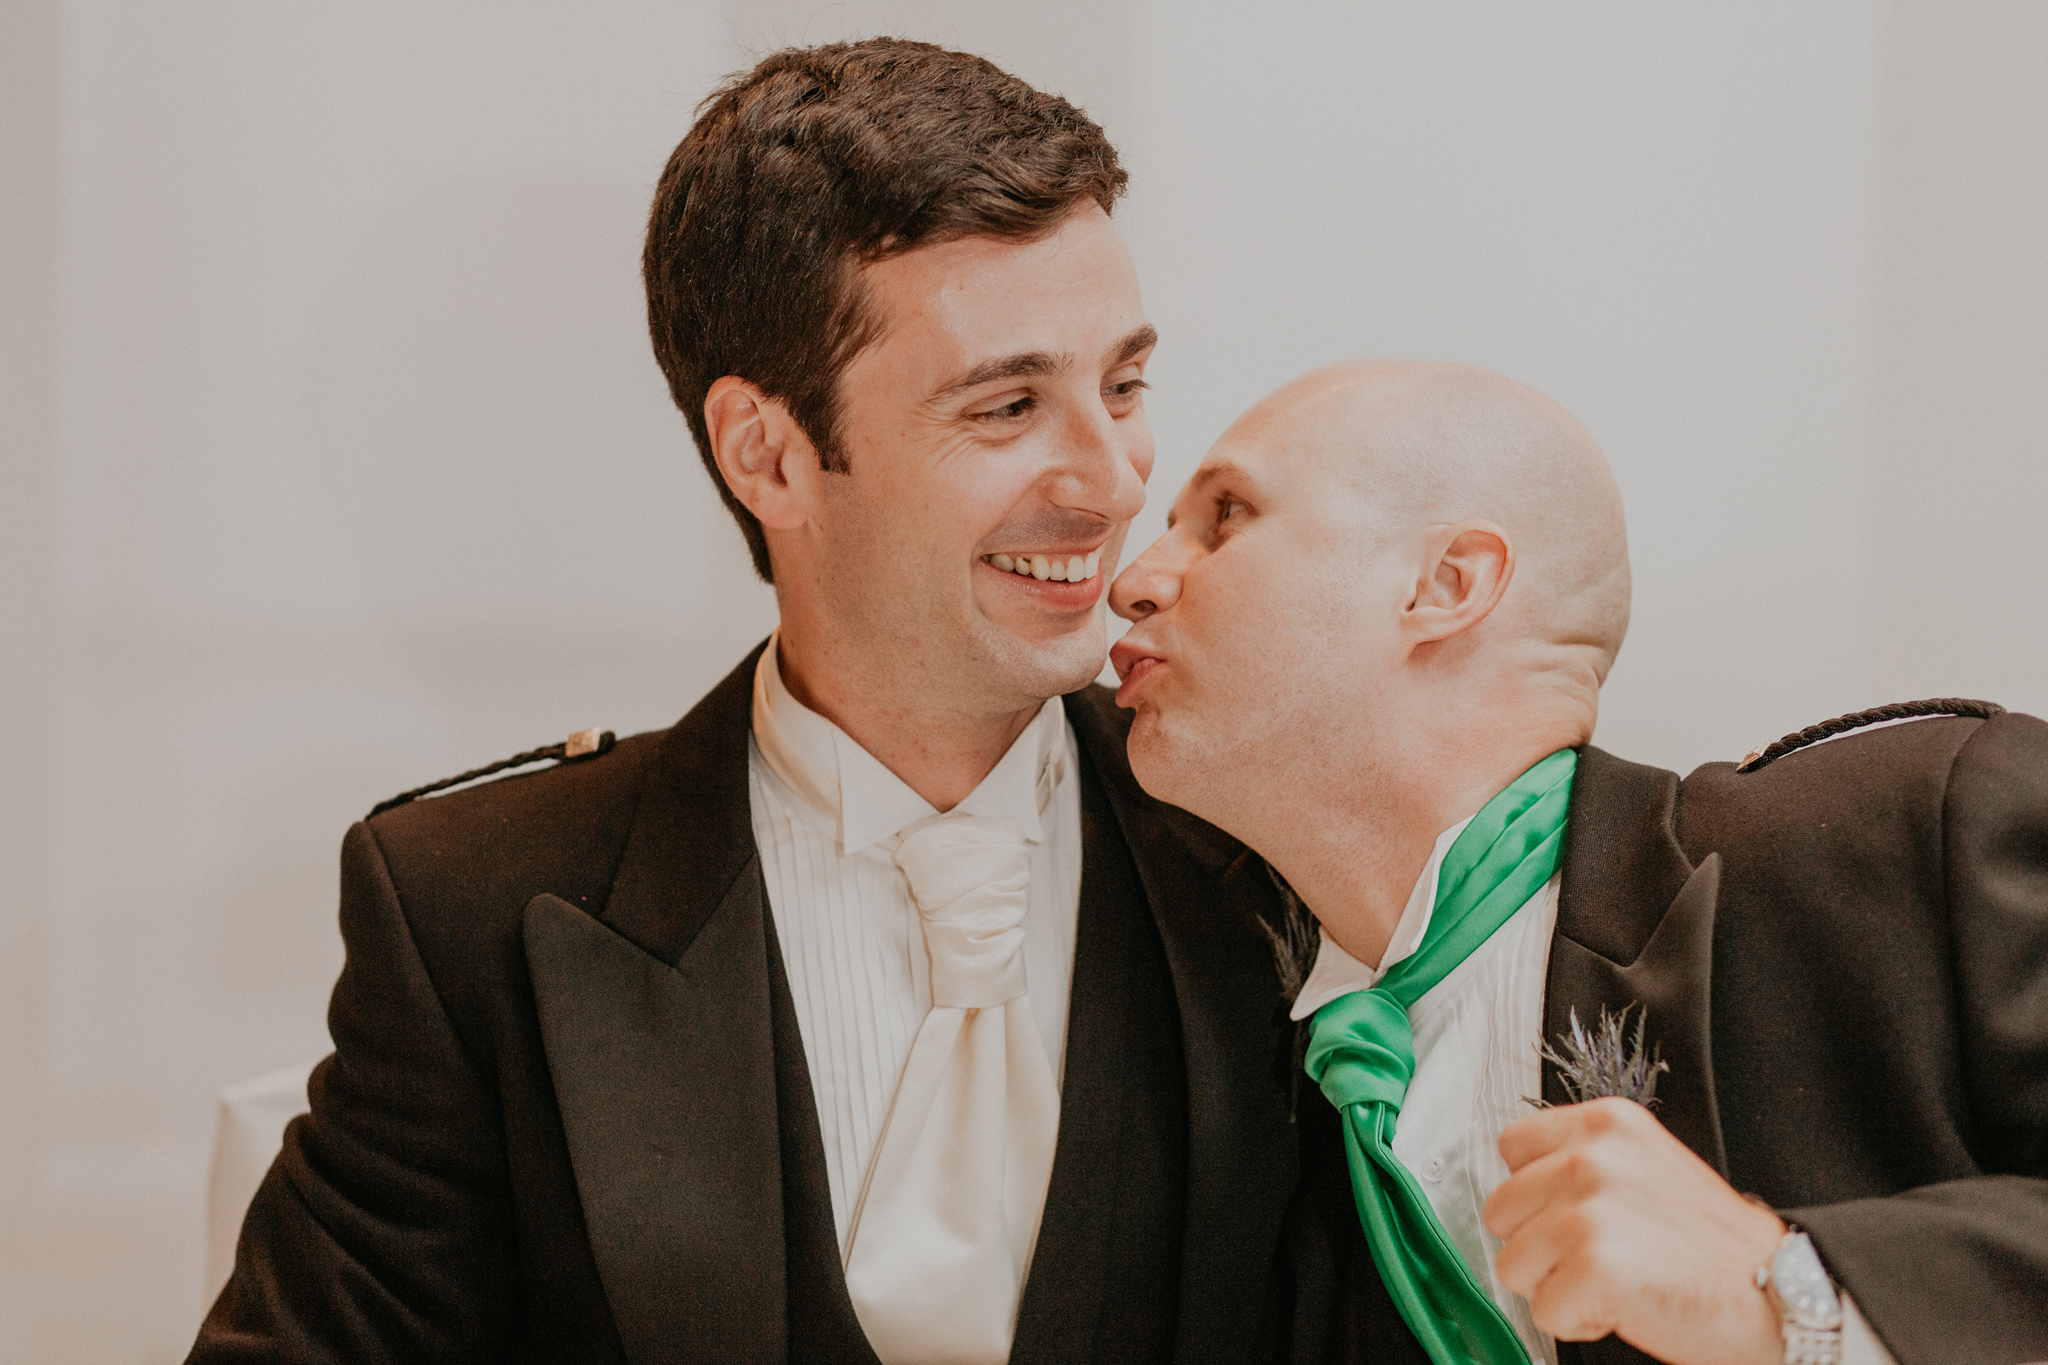 Groomsmen jokes and kisses groom during wedding reception 